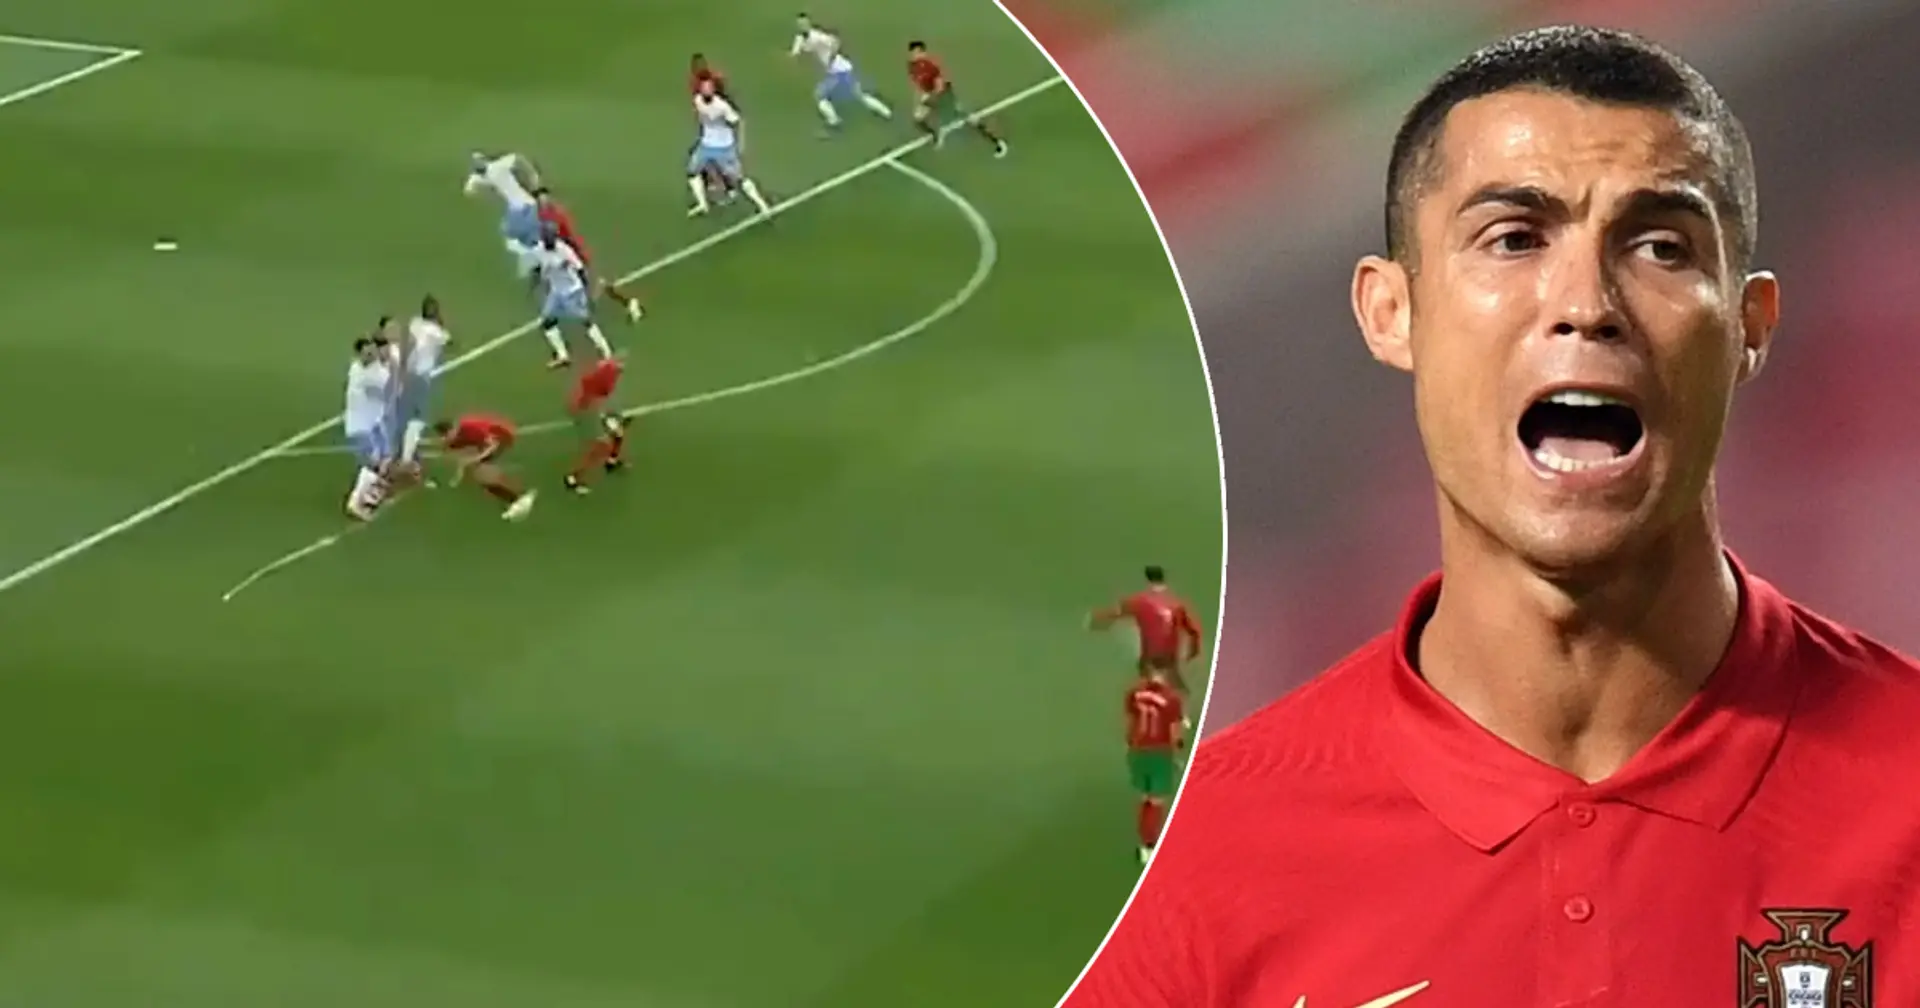 Cristiano Ronaldo sends the ball to the moon in bizarre free-kick for Portugal - fans are amused 